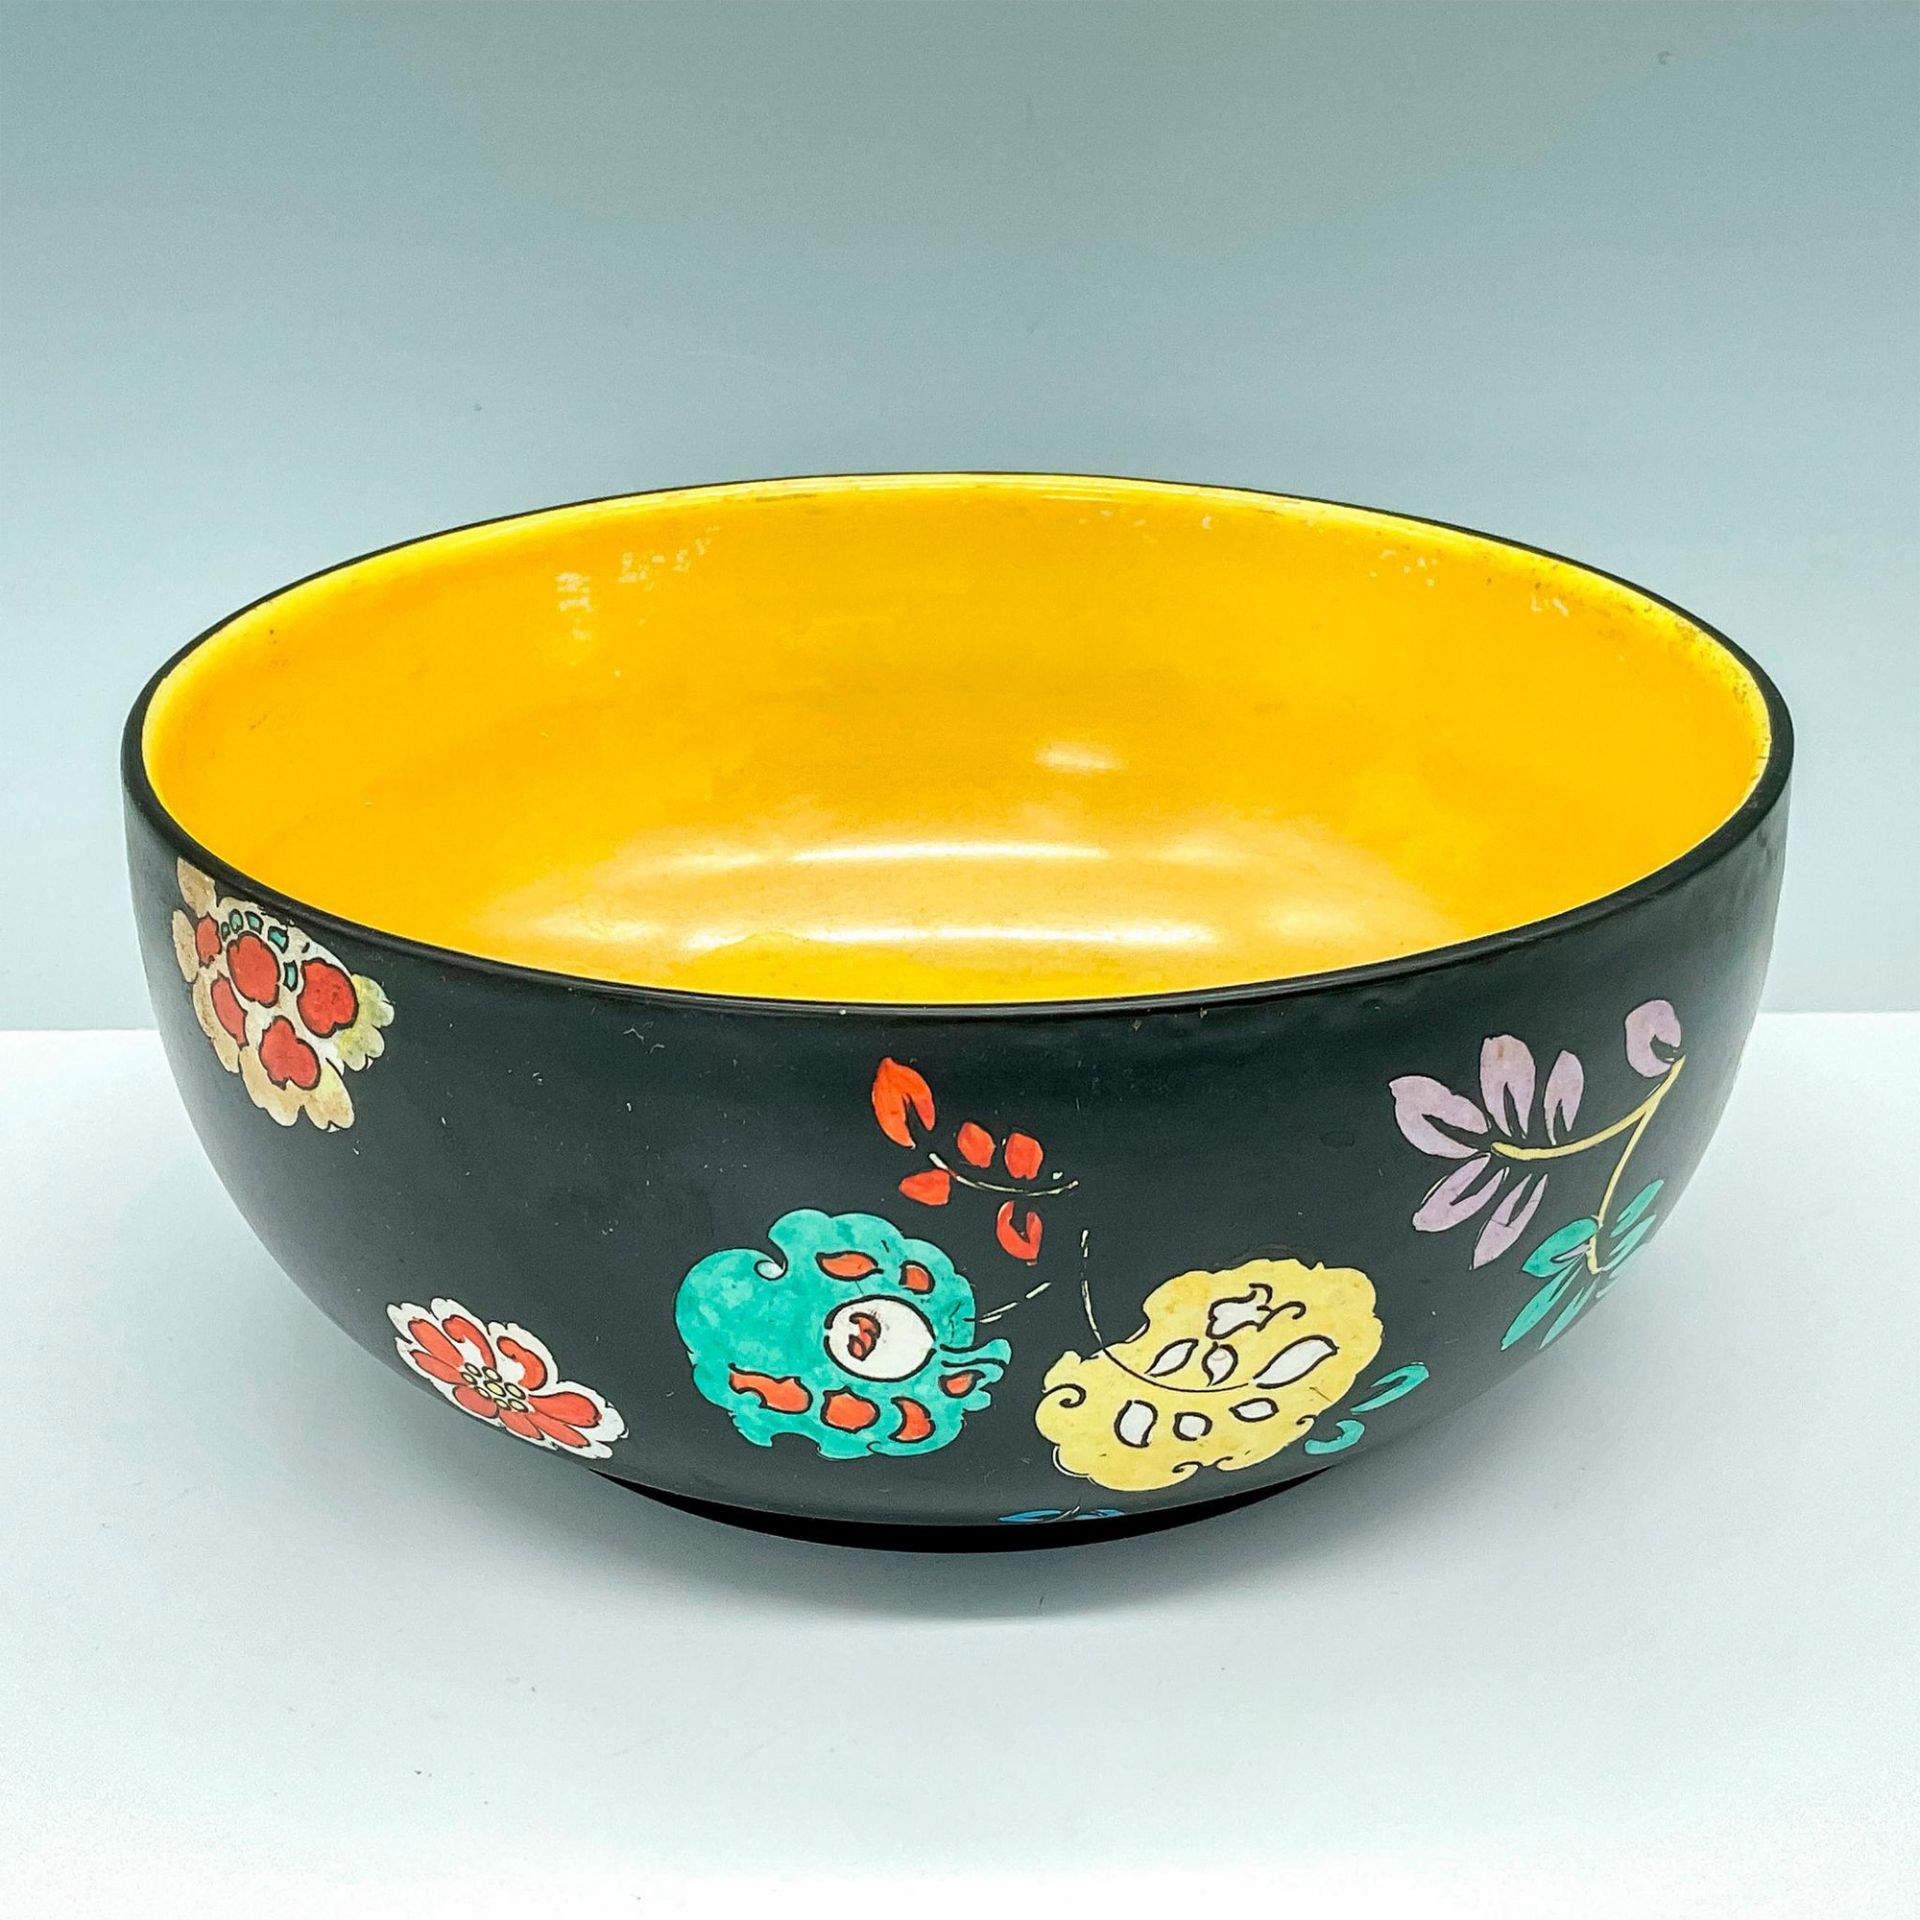 Coronet Art Pottery Bowl Black - Image 2 of 3